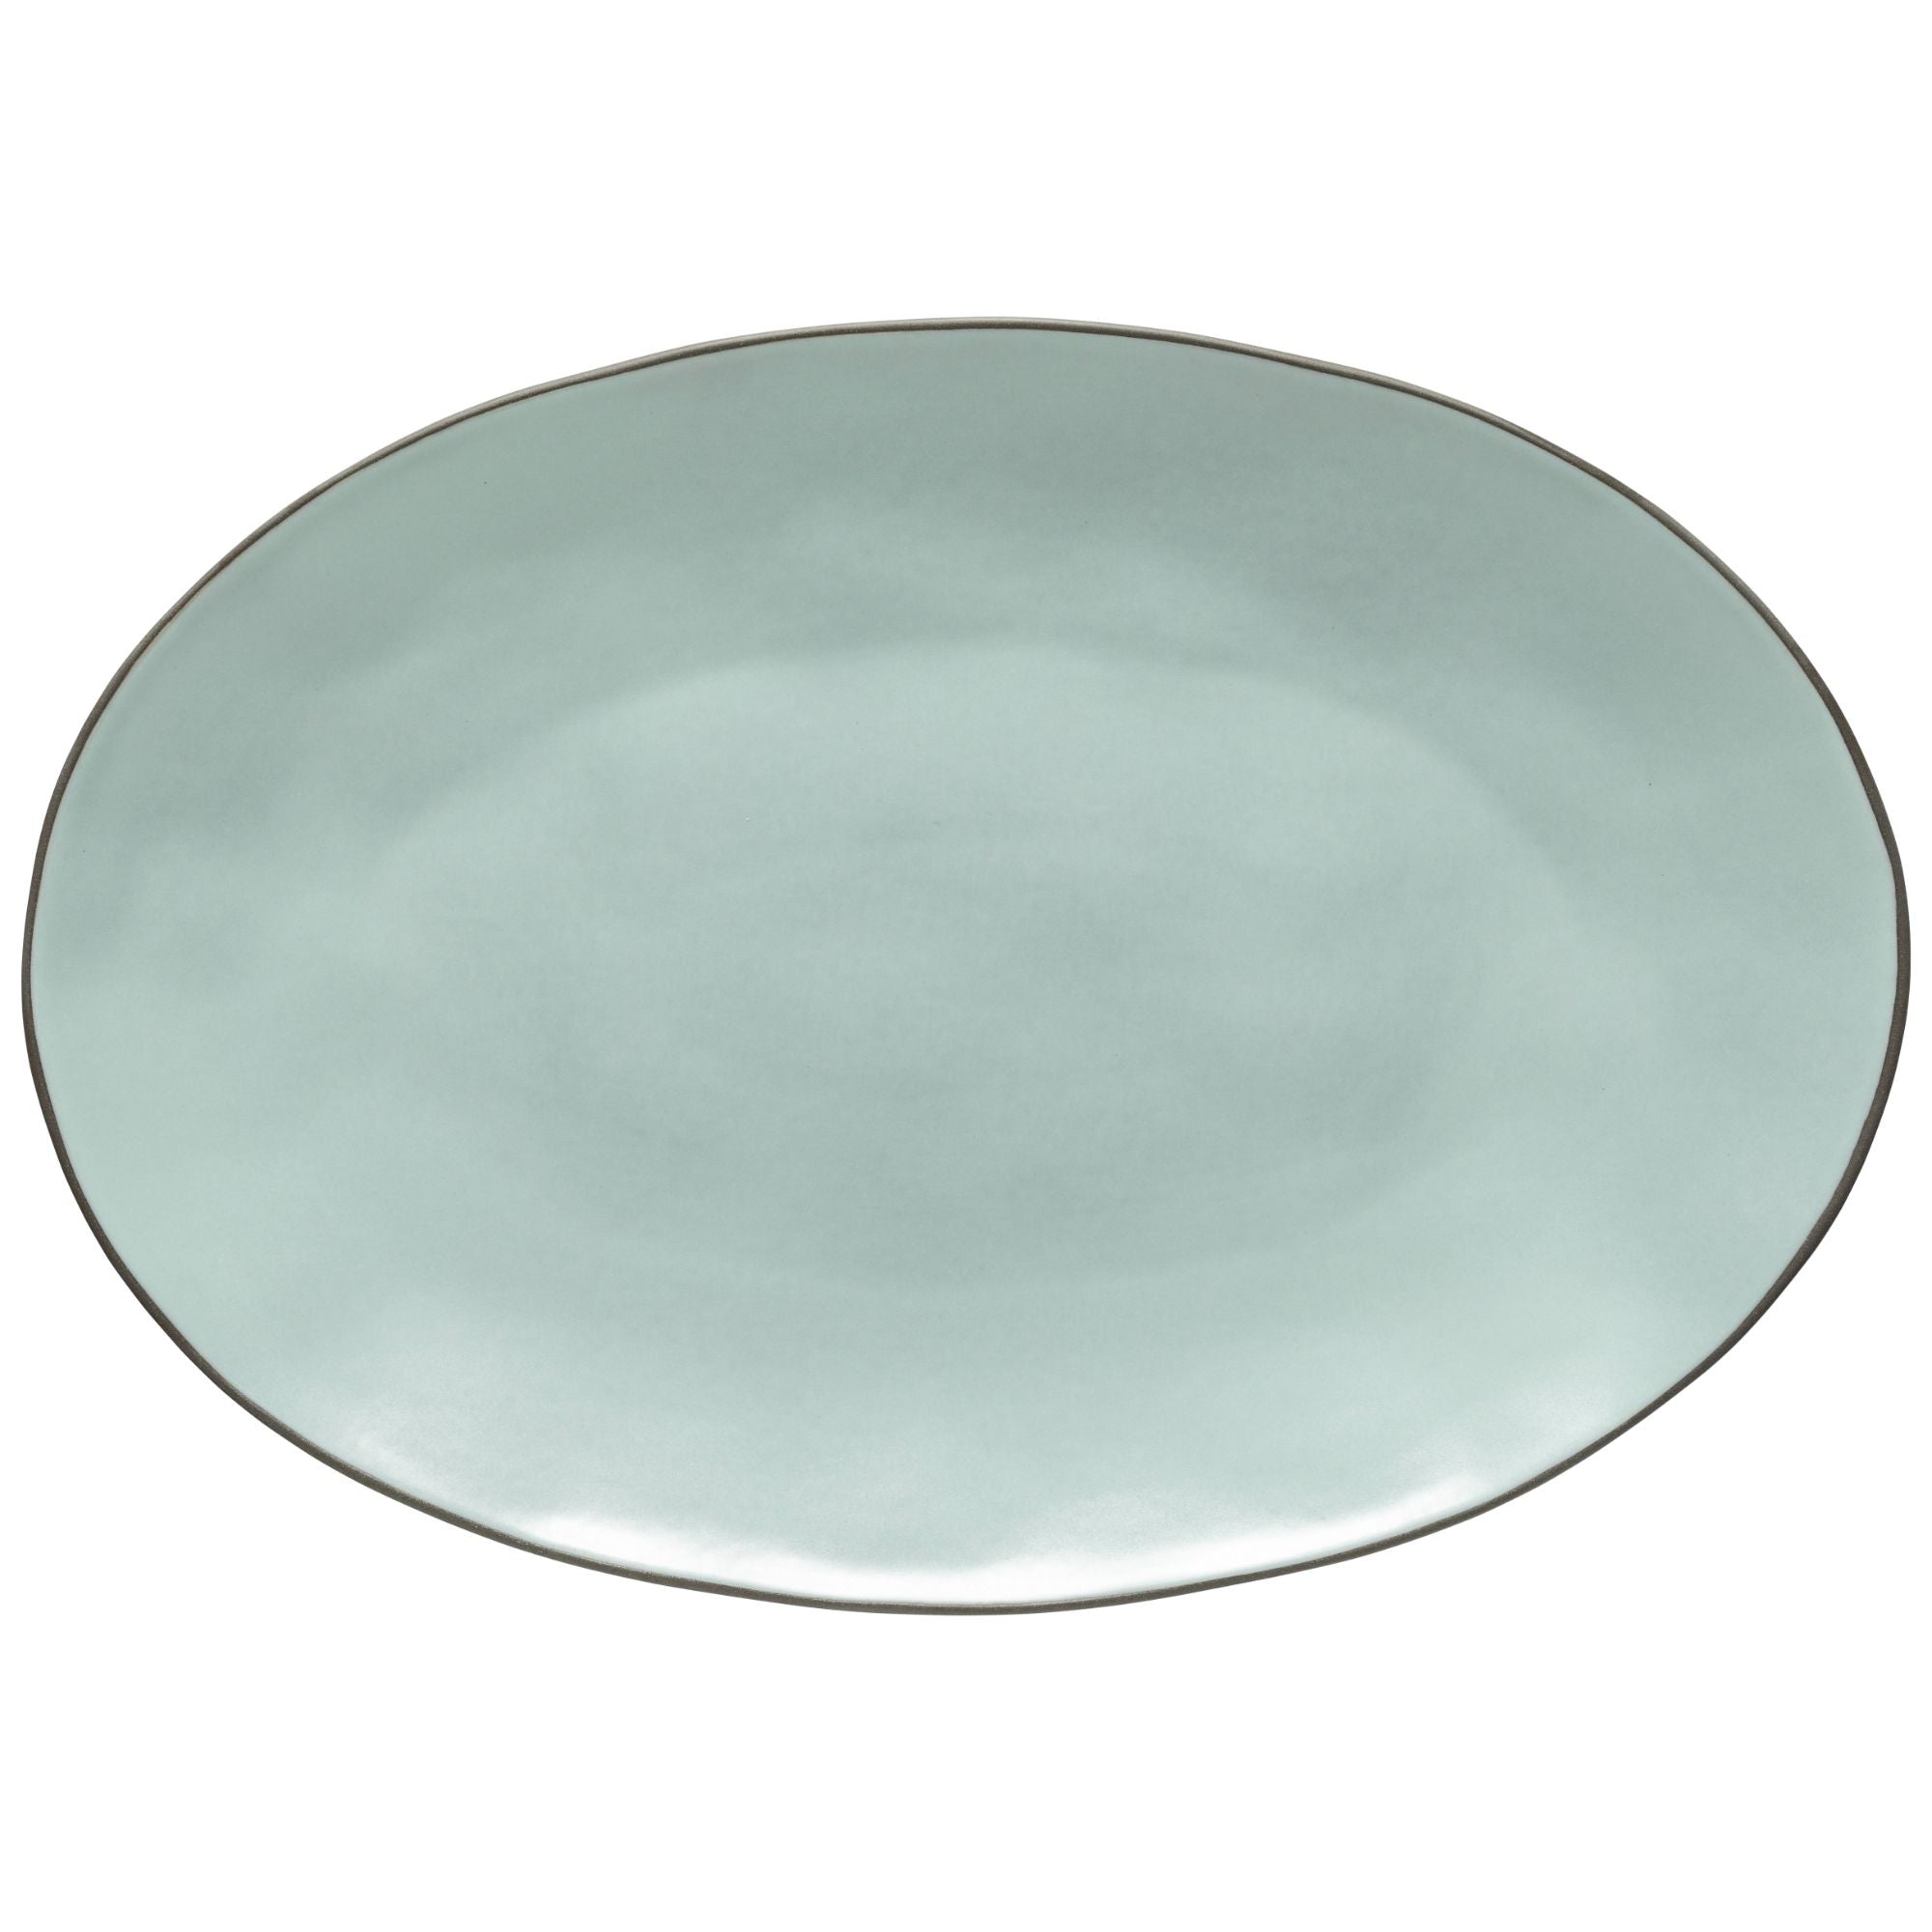 Stacked Organics Oval Platter